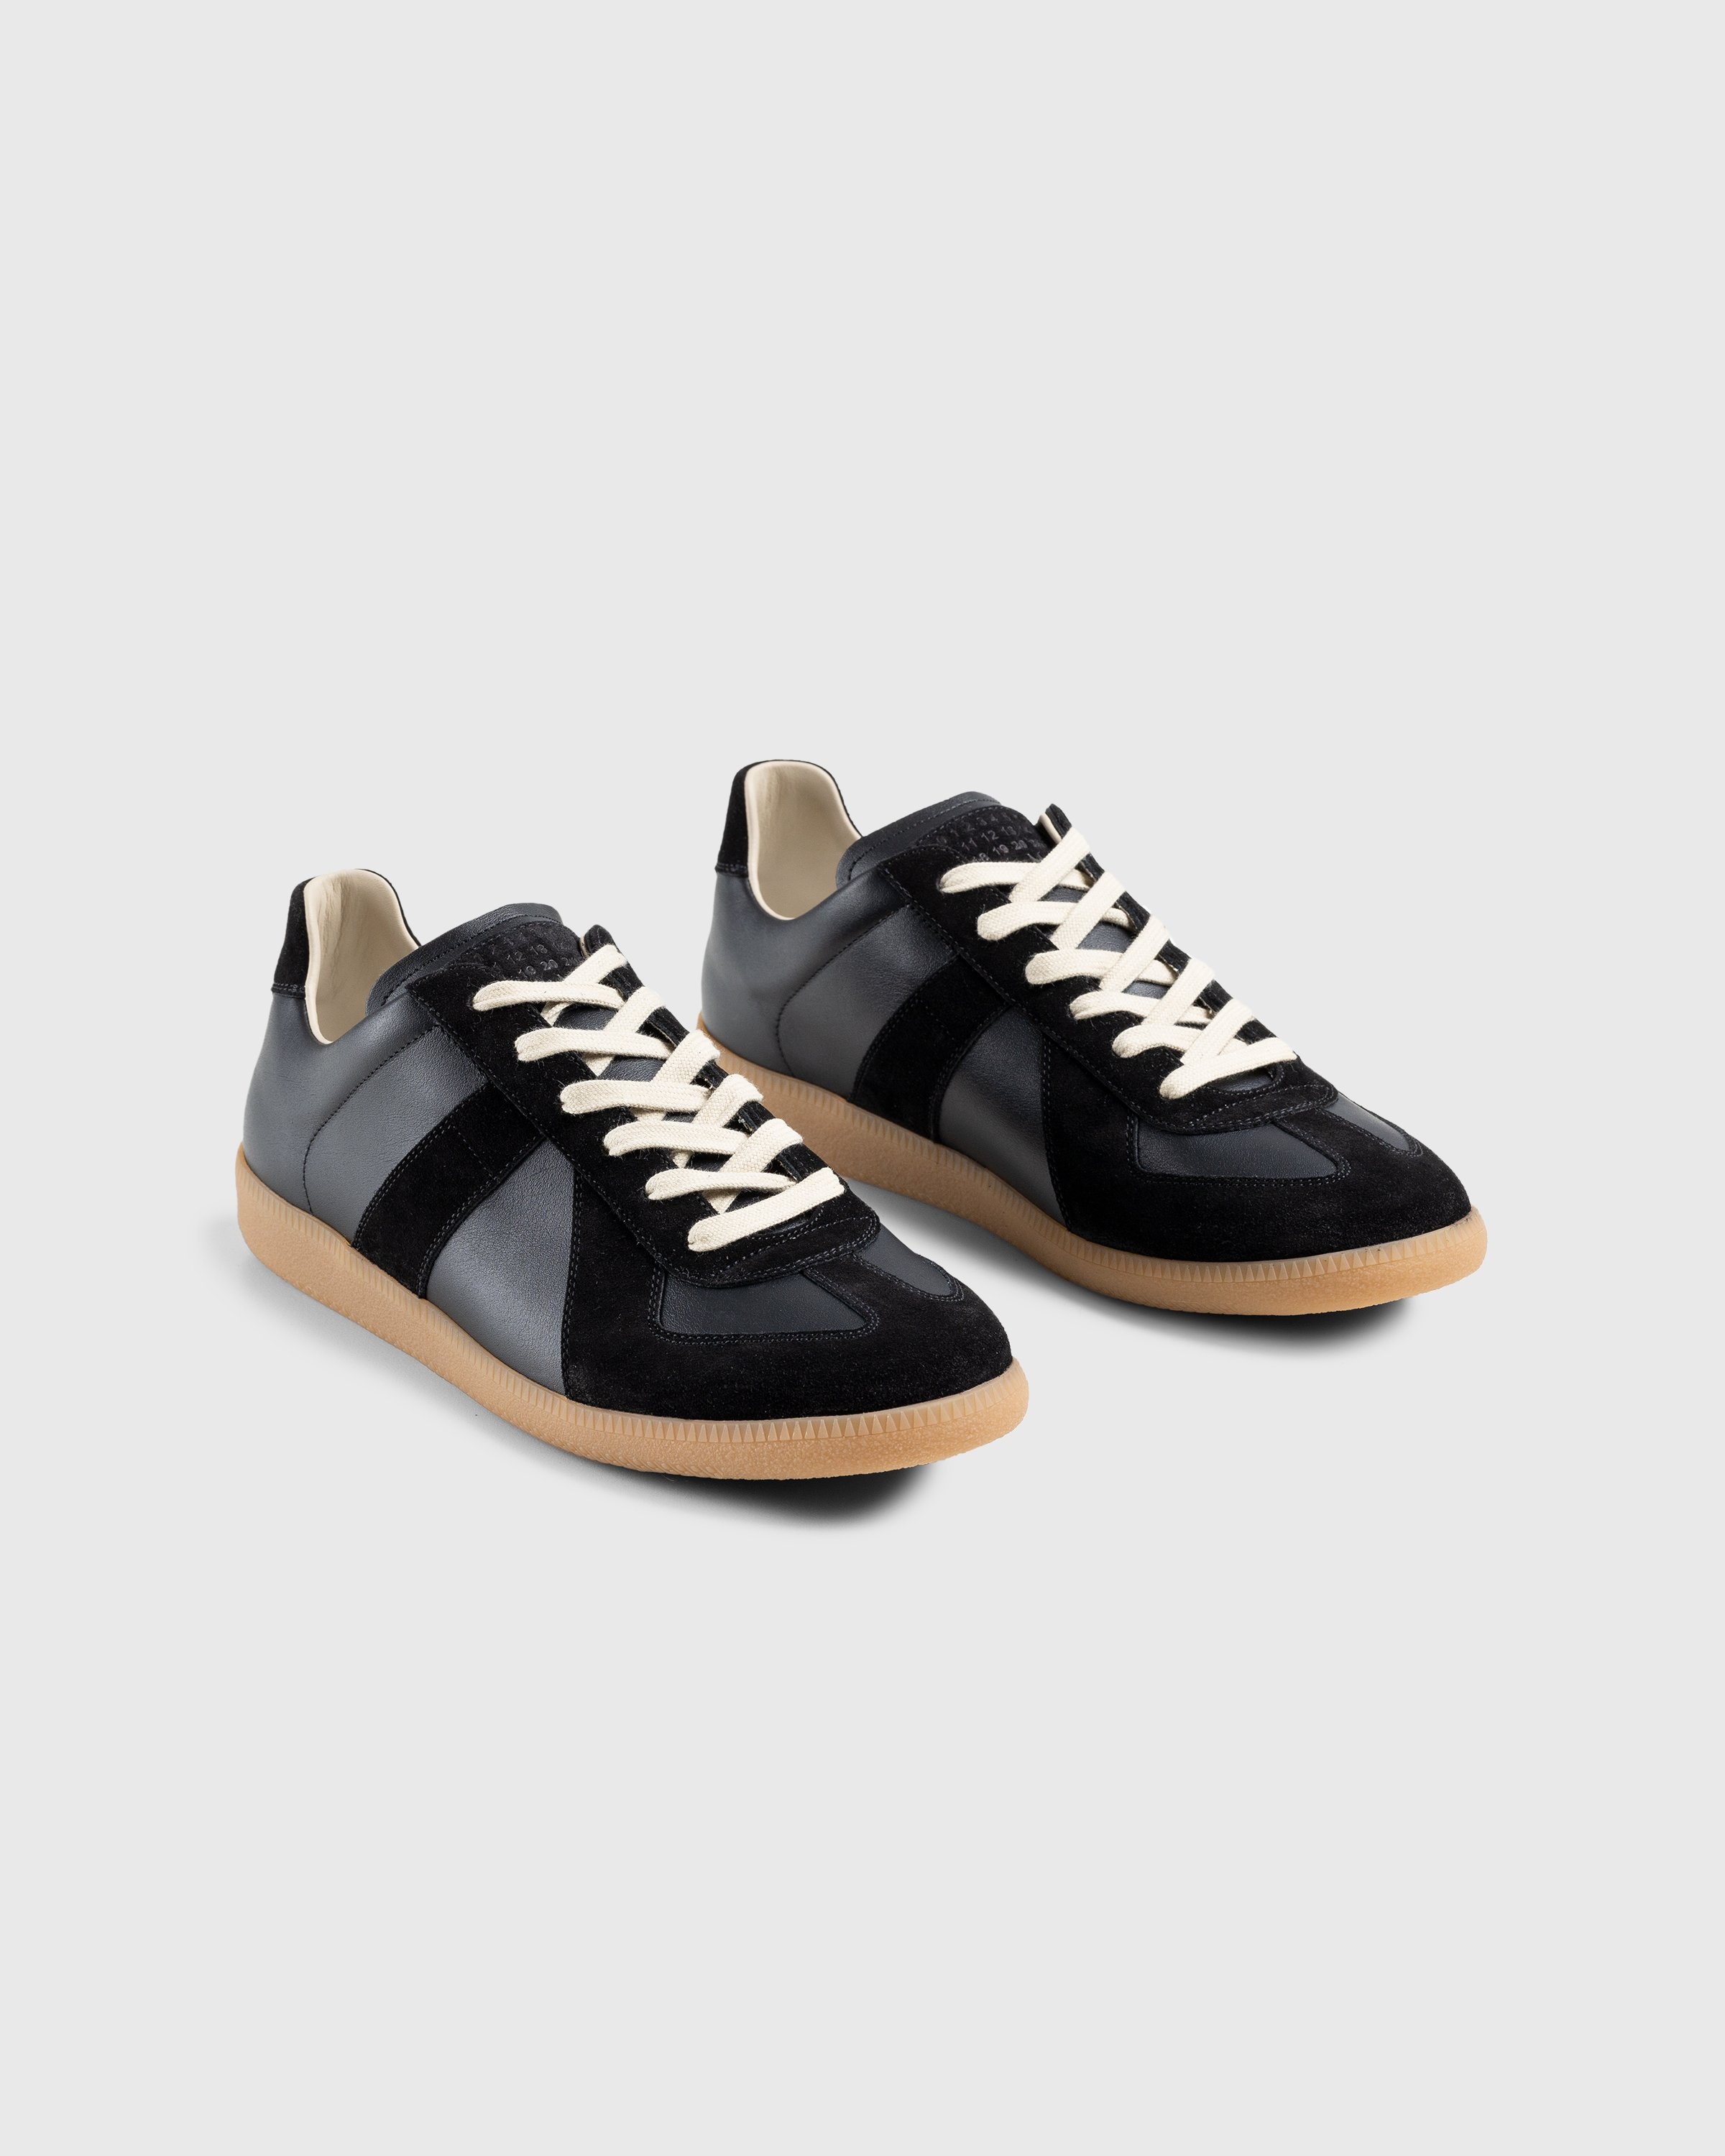 Maison Margiela – Leather Replica Sneakers Black